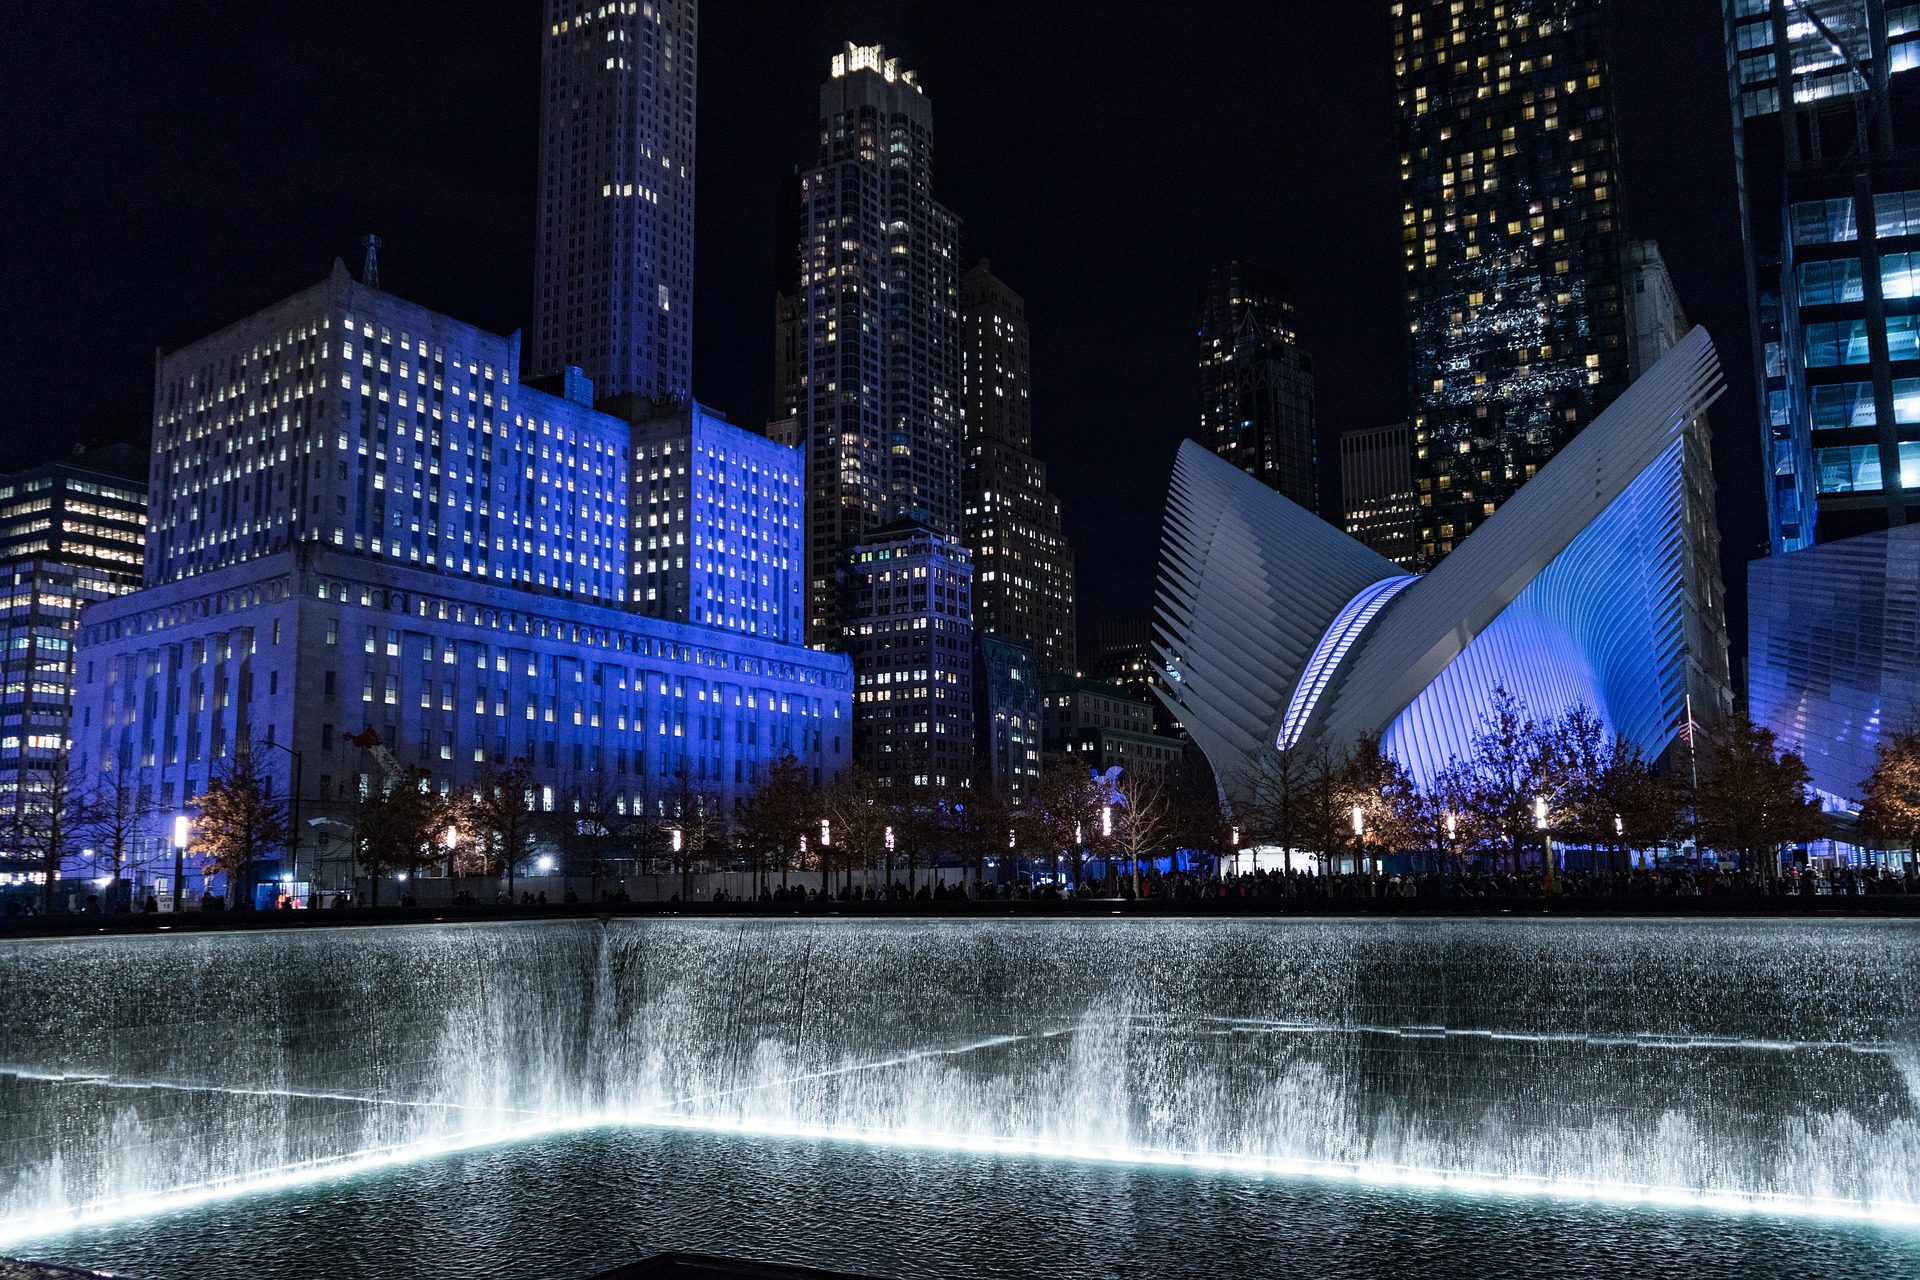 9/11 Memorial Plaza, New York